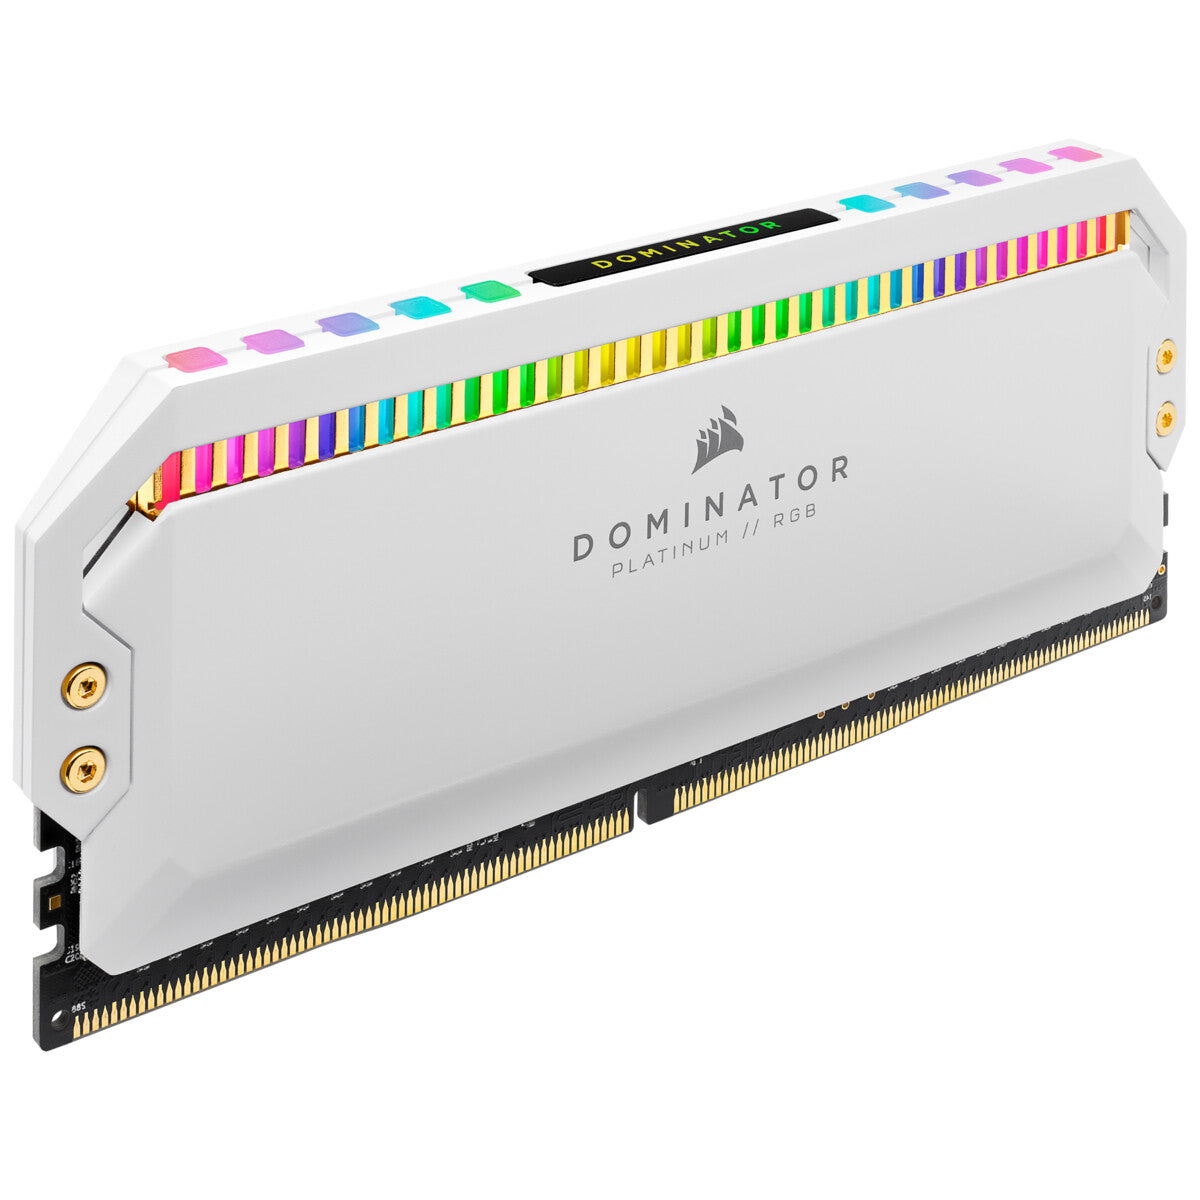 Corsair Dominator Platinum RGB - 32 GB 2 x 16 GB DDR4 3200 MHz memory module